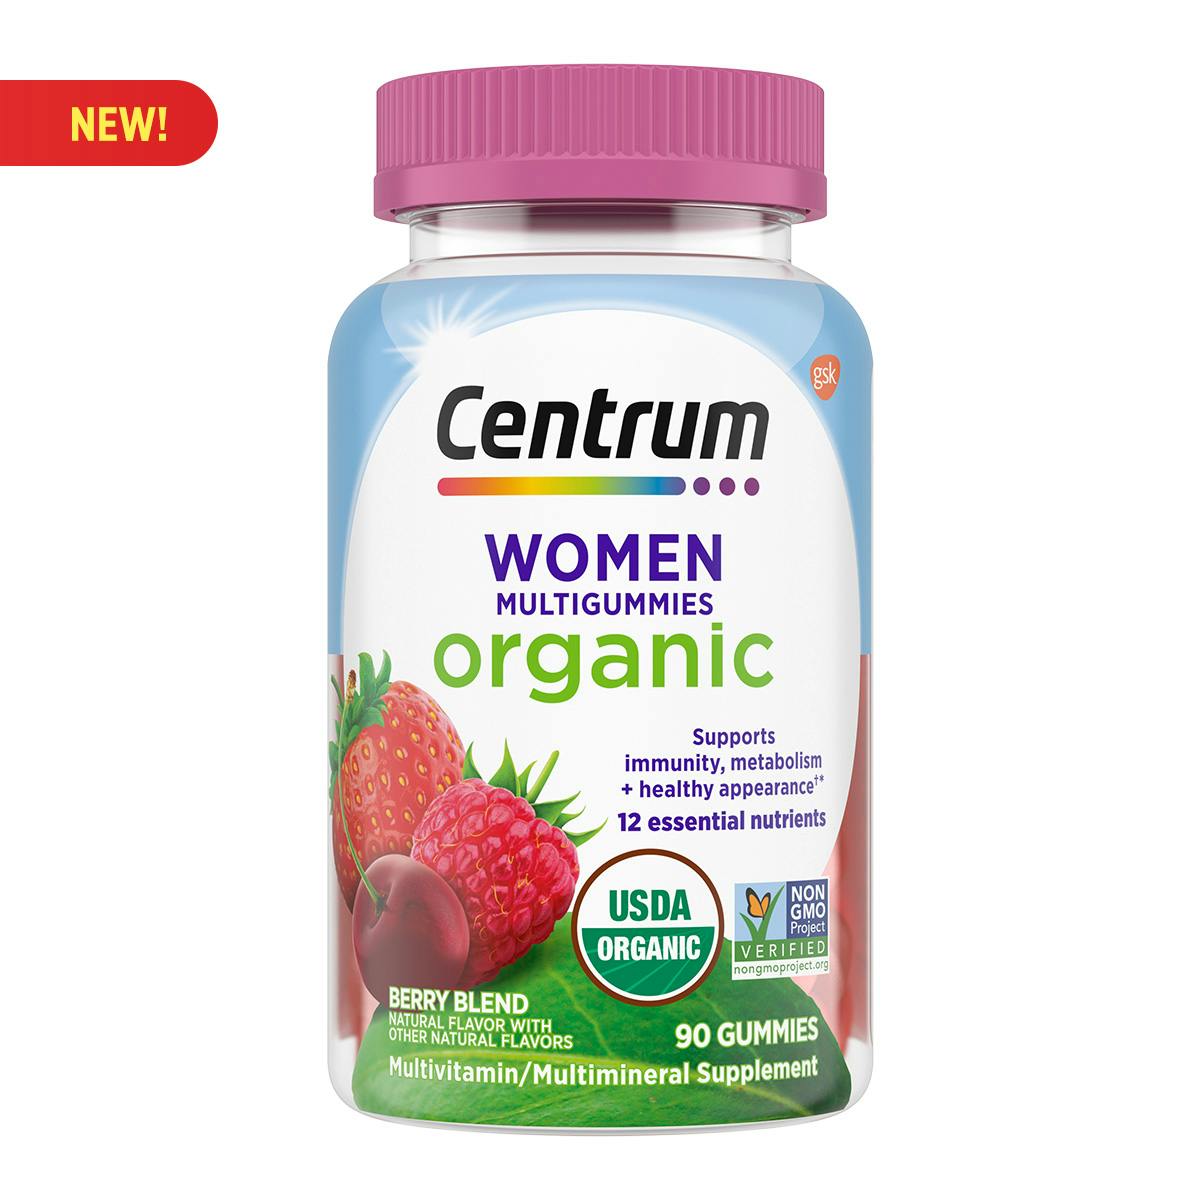 Box of Centrum Organic Women Multigummies